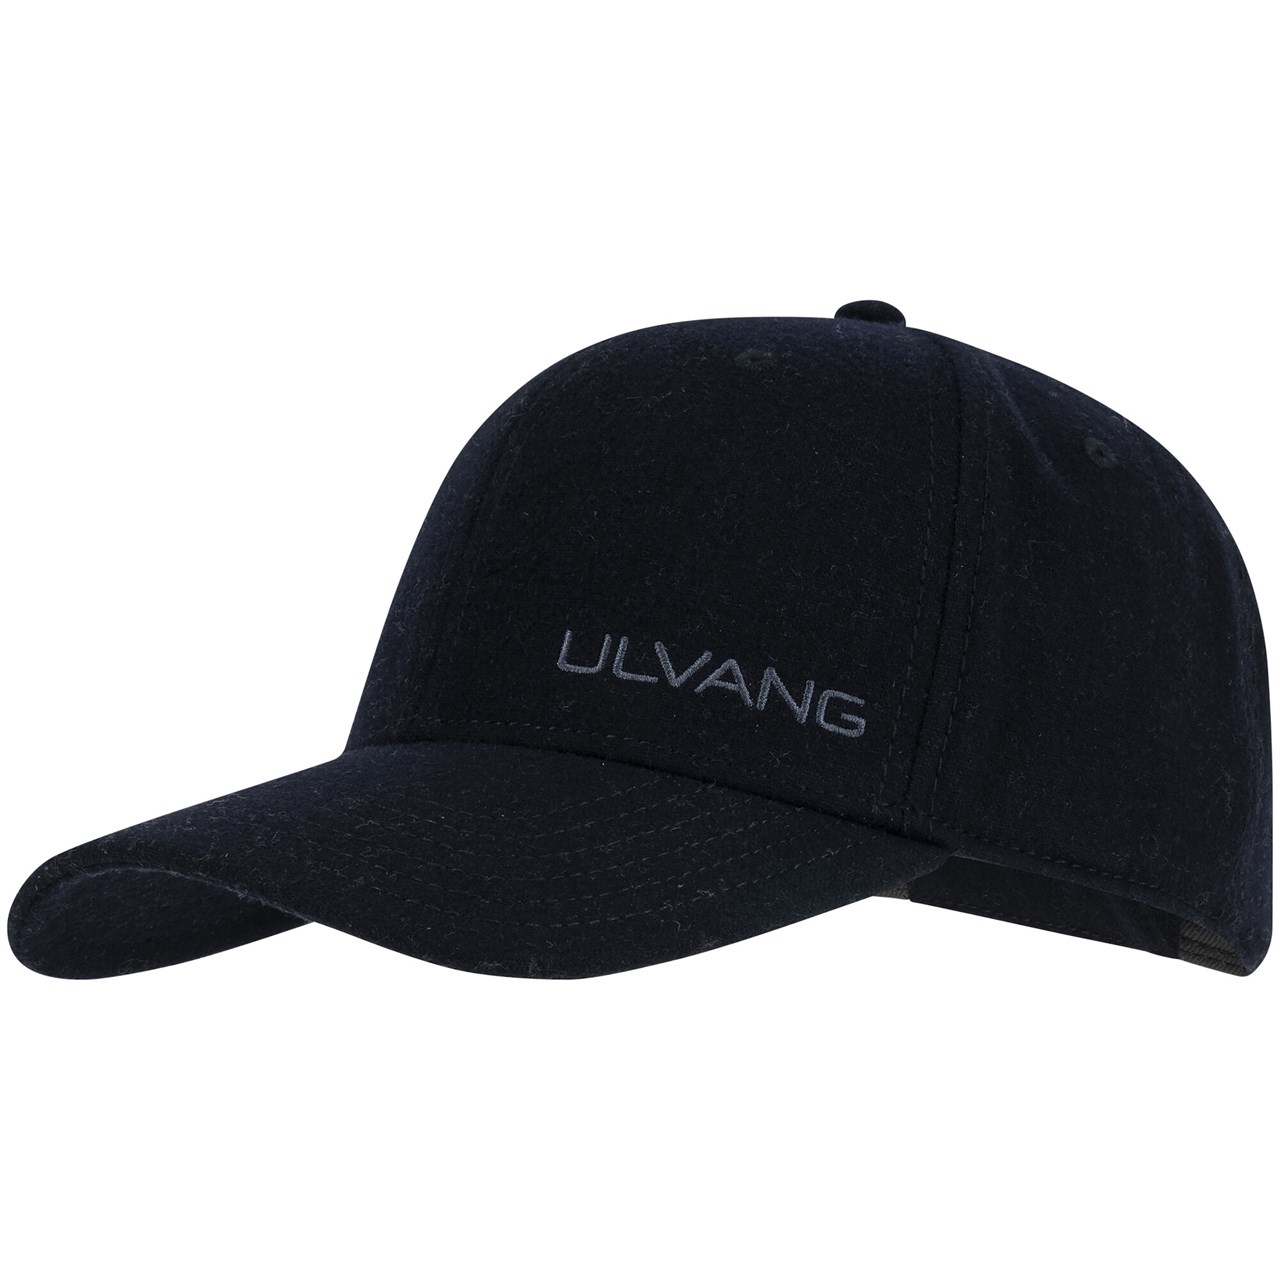 Immagine di Ulvang Logo Cappellino - New Navy